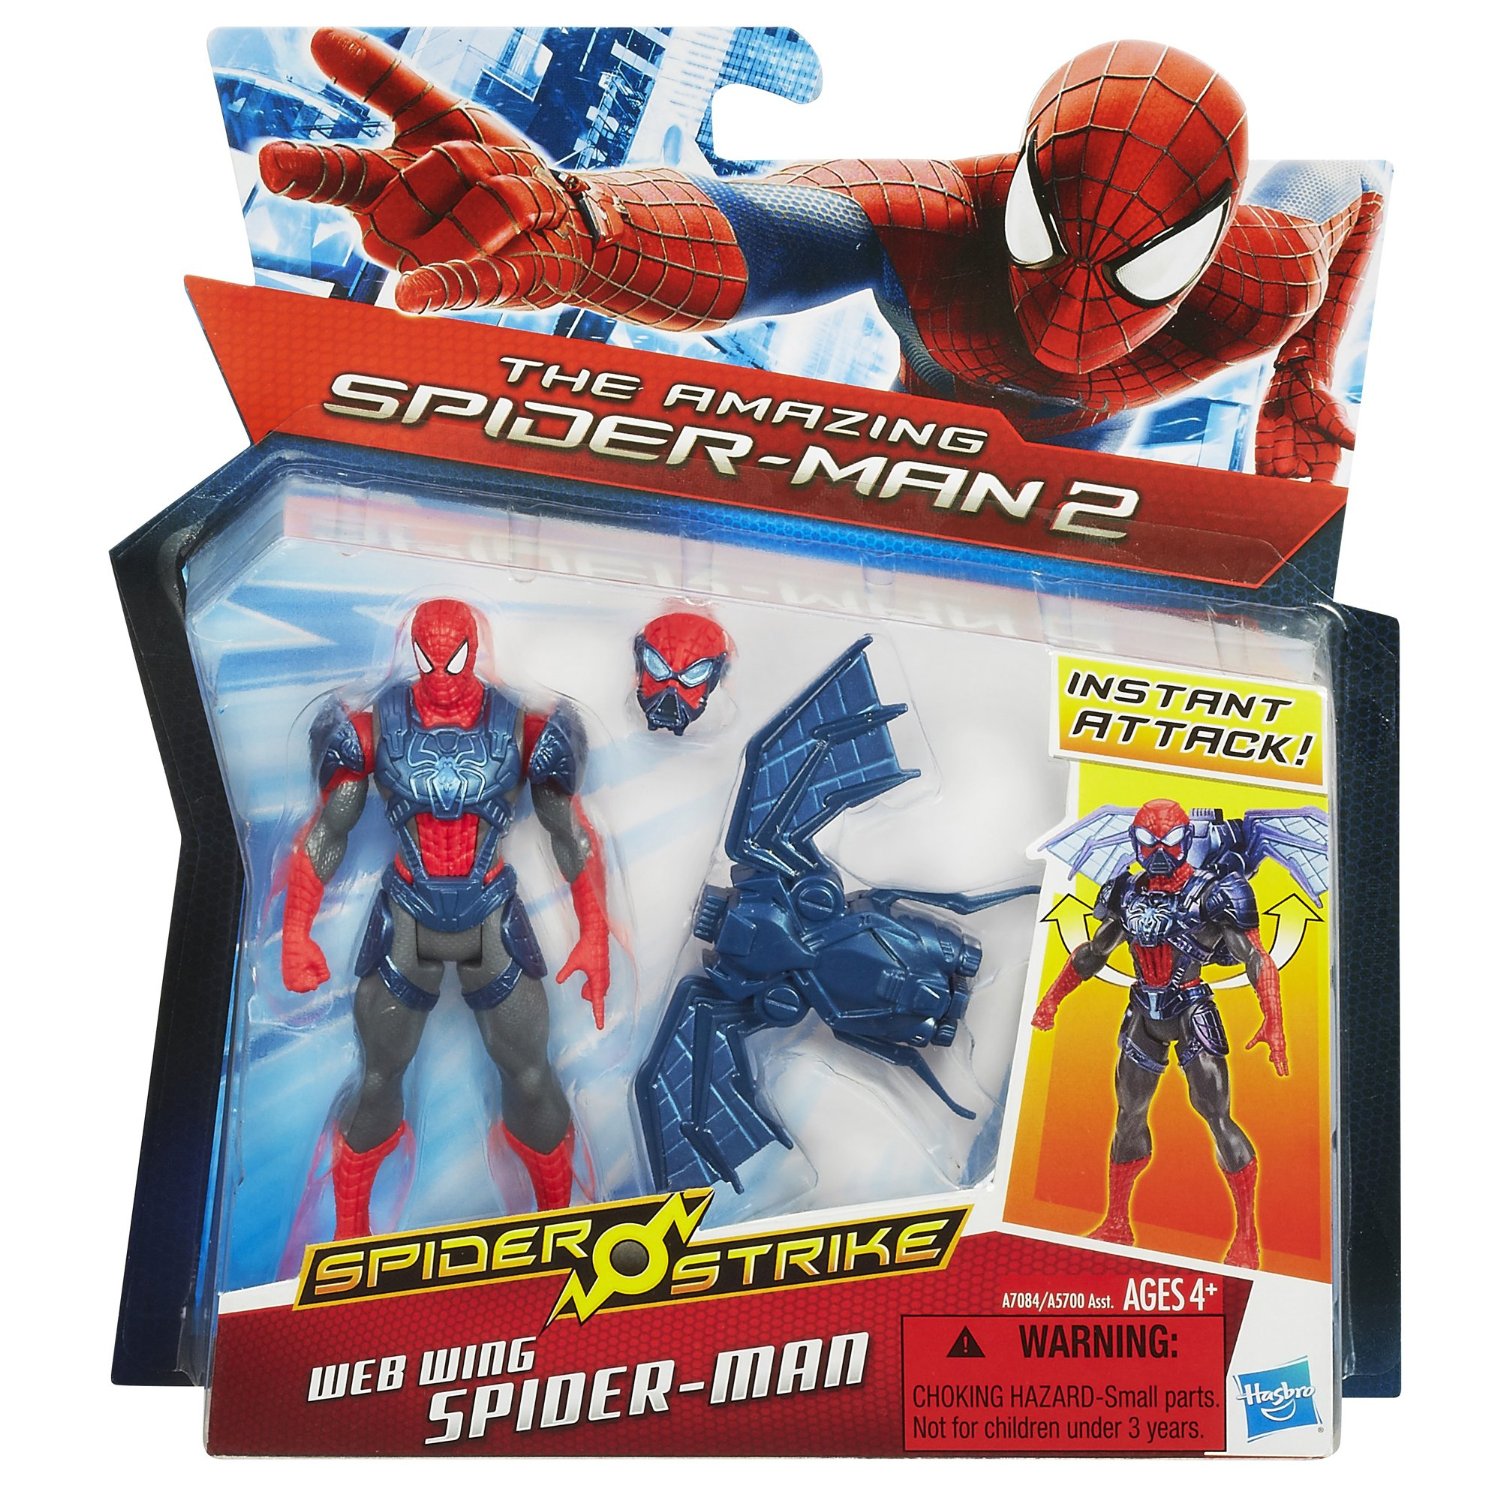 Spider Strike Web Wing Spiderman Figure